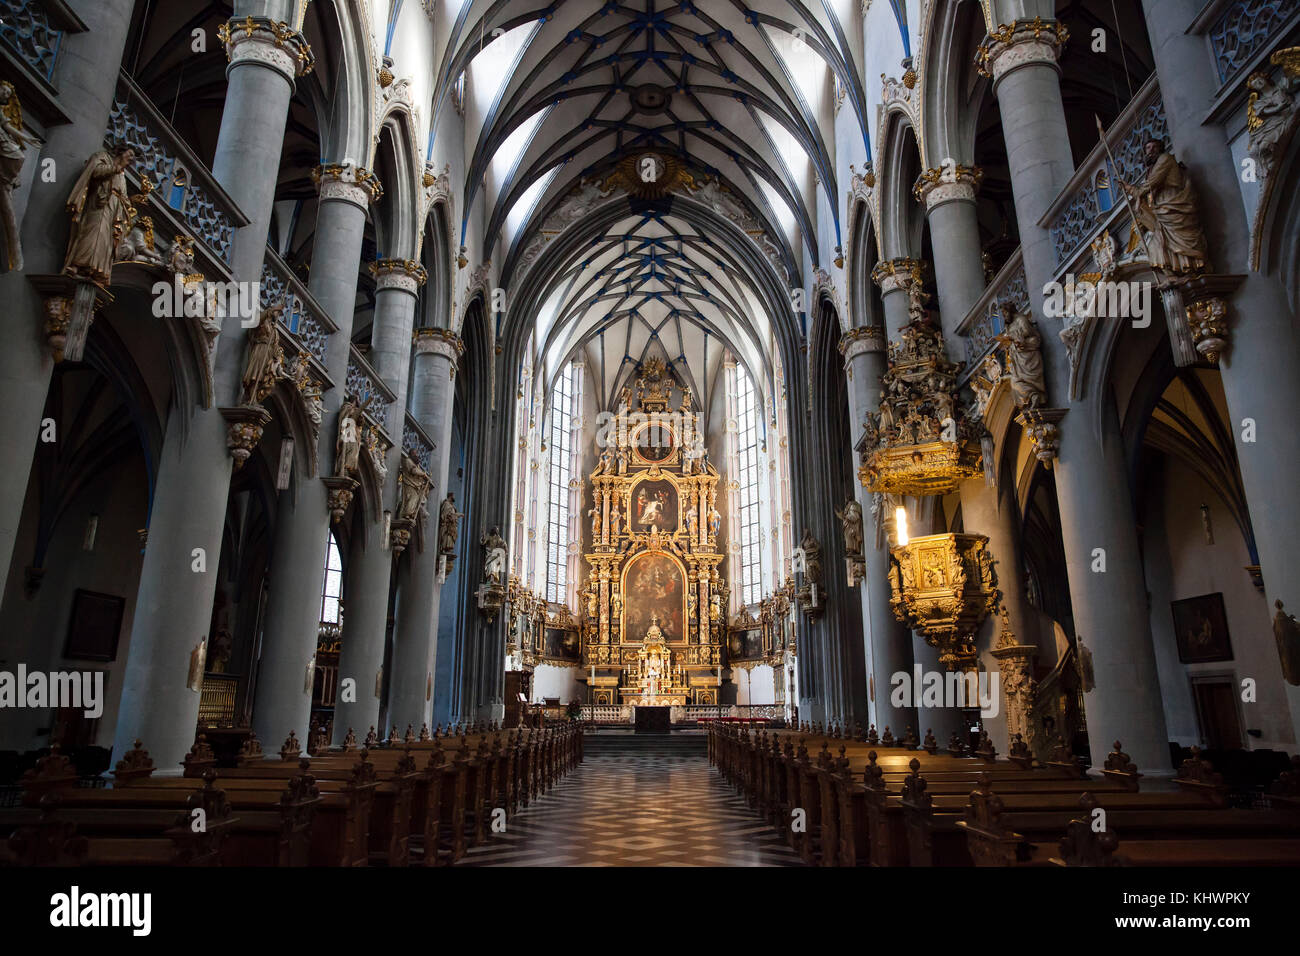 Germania, Colonia, la chiesa gesuita in stile barocco di S. Mariae Himmelfahrt. Deutschland, Koeln, die fruehbarocke Jesuitenkirche St. Mariae Himmelfahrt. Foto Stock